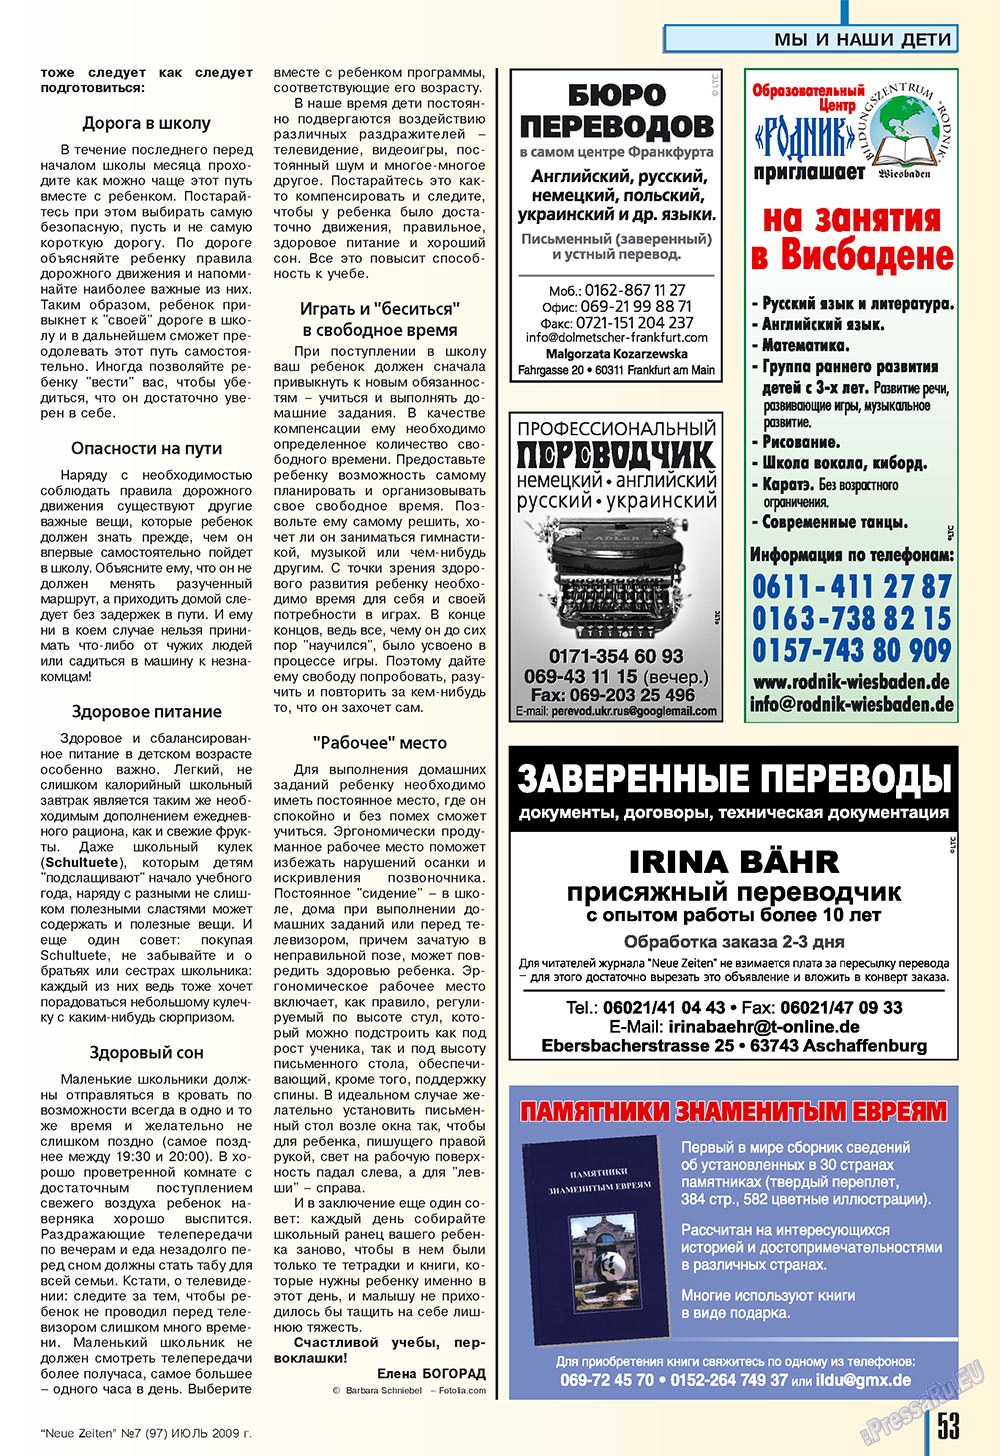 Neue Zeiten (журнал). 2009 год, номер 7, стр. 53